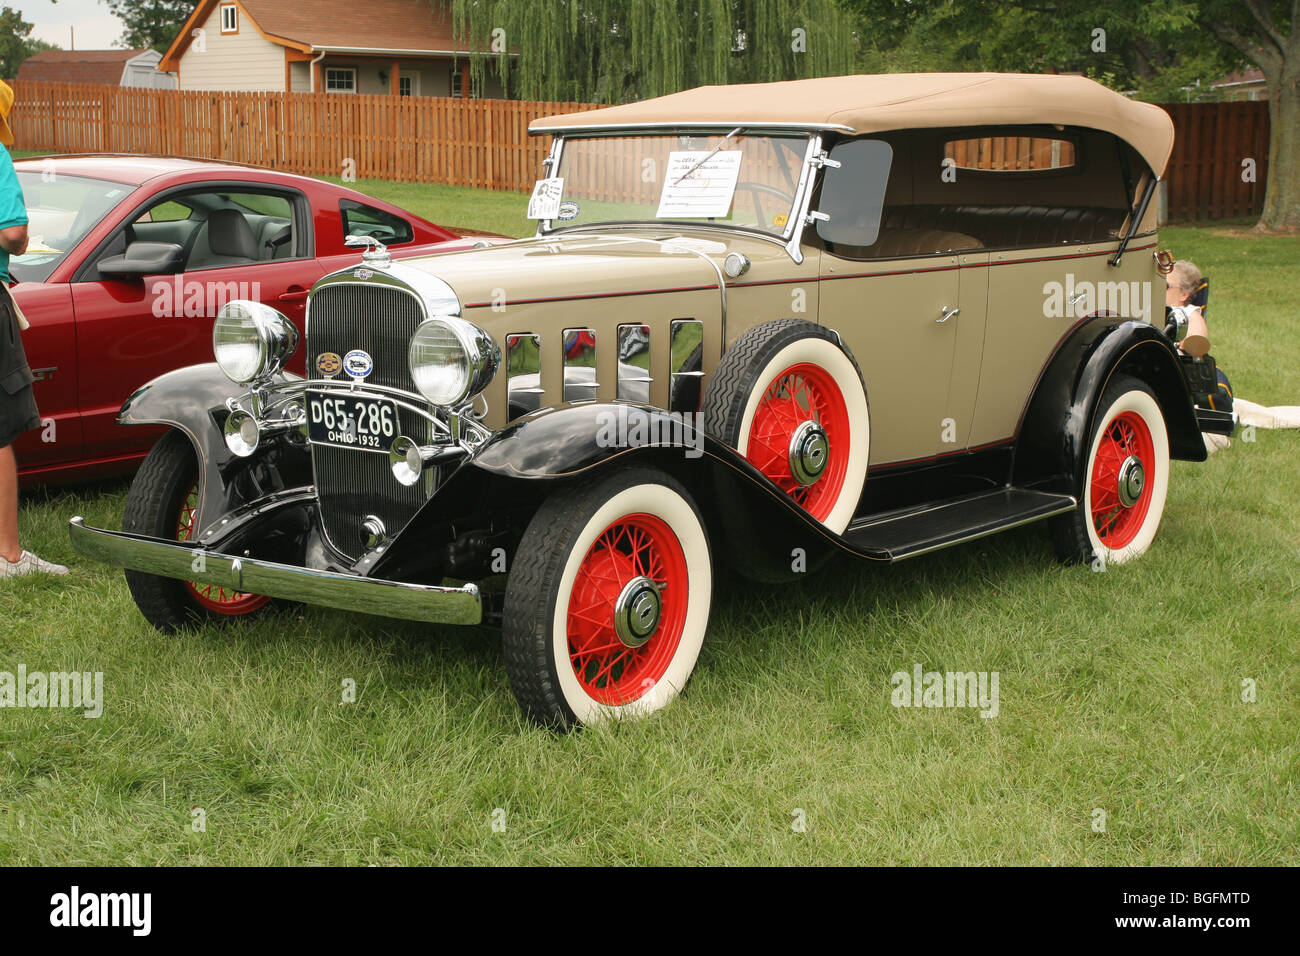 Auto- 1932 Chevrolet Phaeton. Beavercreek Popcorn Festival Car Show. Beavercreek, Dayton, Ohio, USA. D65286 65286 Stock Photo